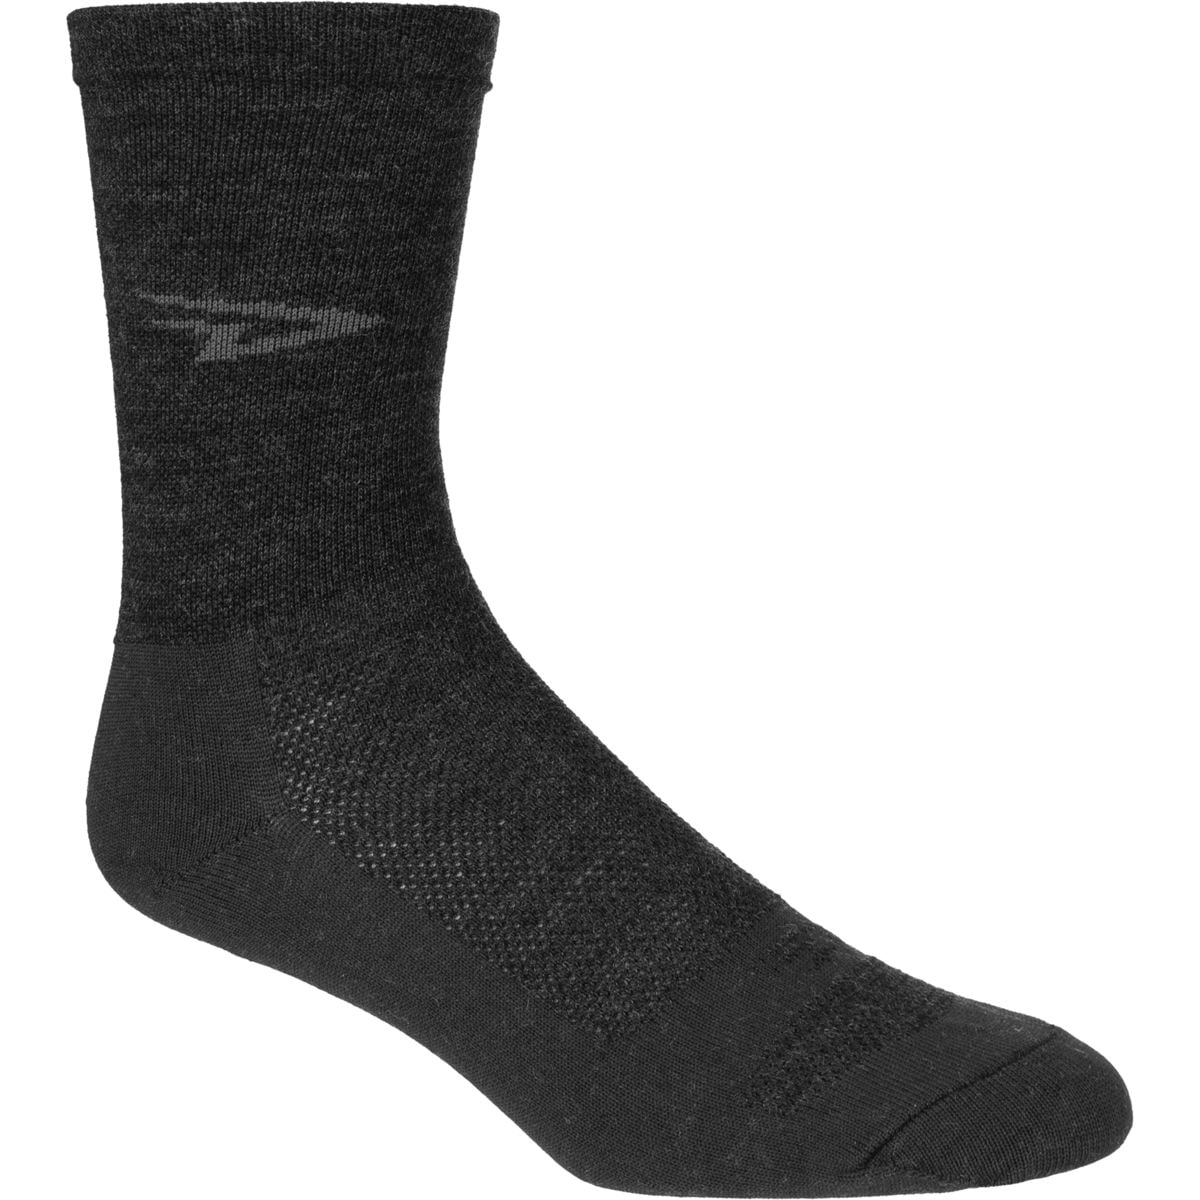 DeFeet Wooleator High Top 5in Socks - Men's